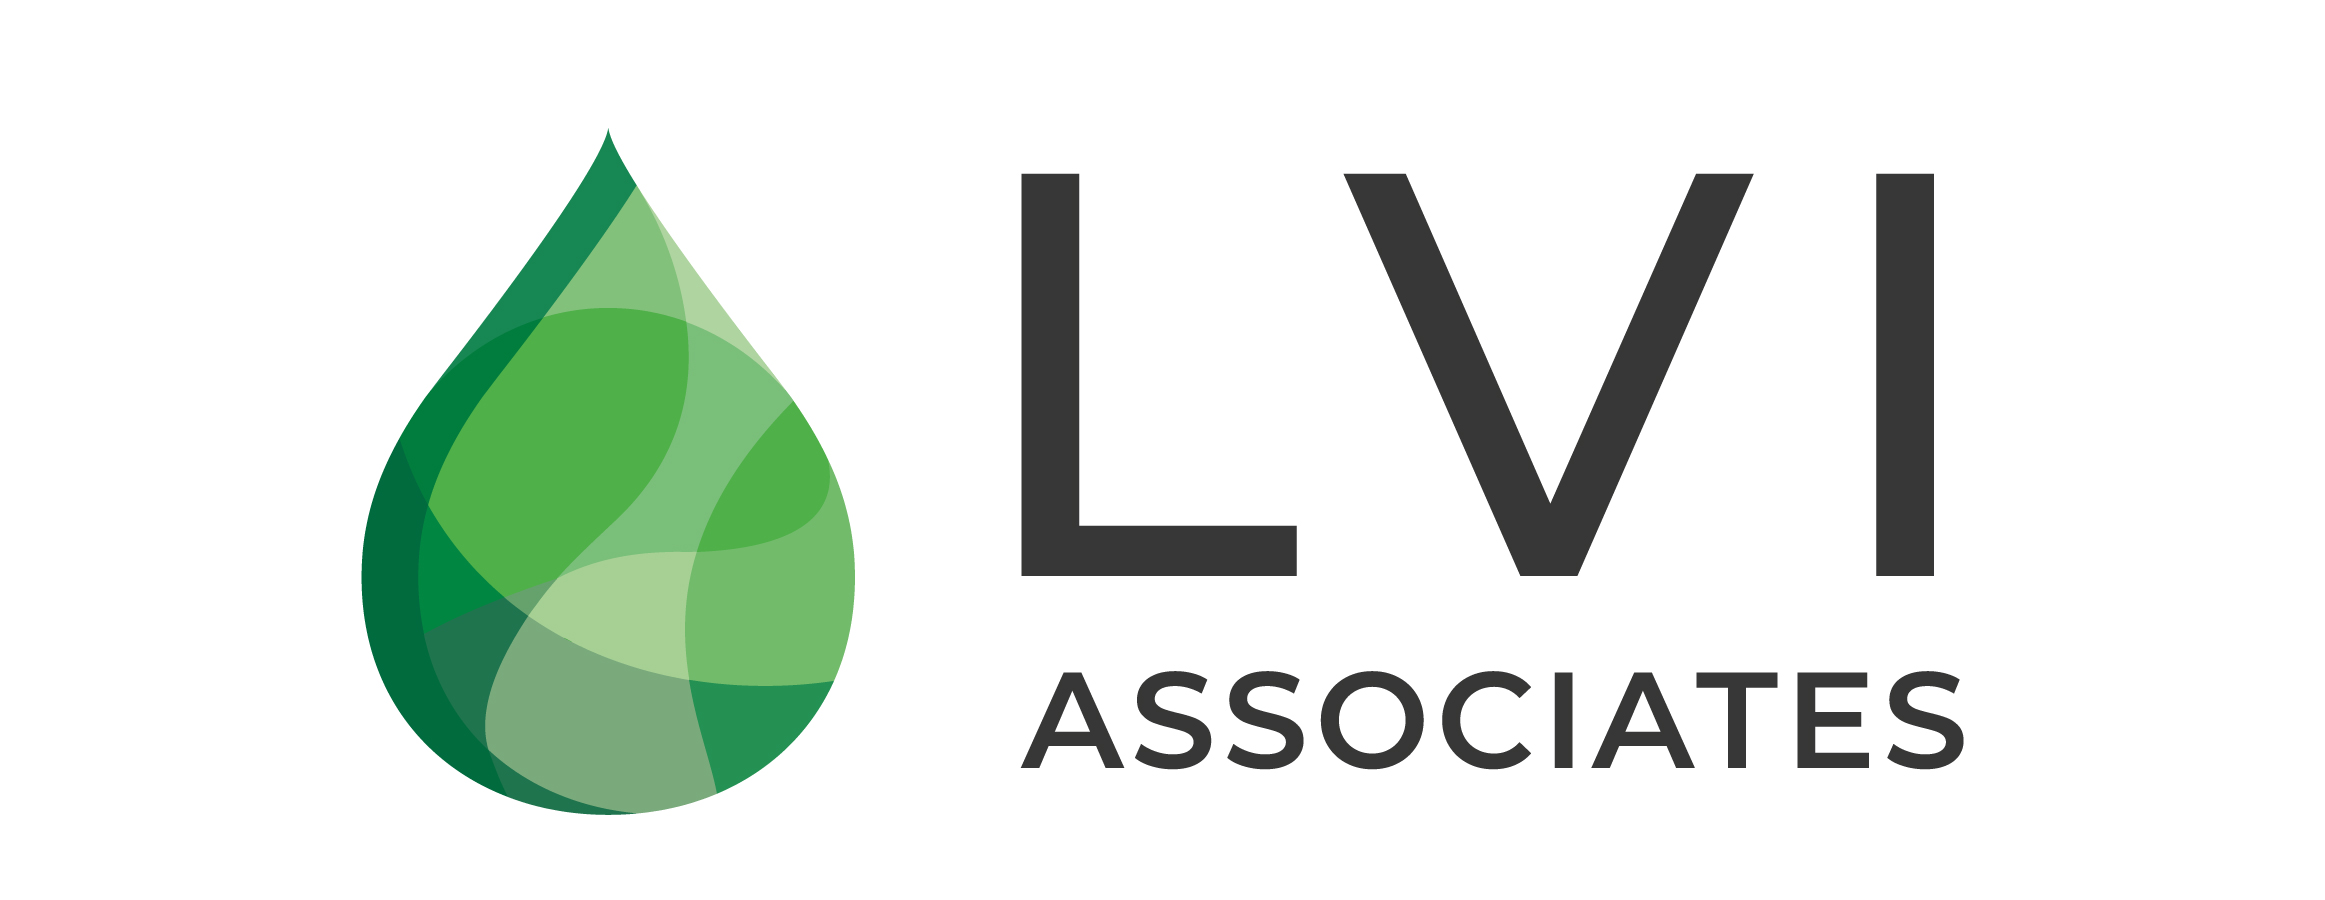 LVI Associates